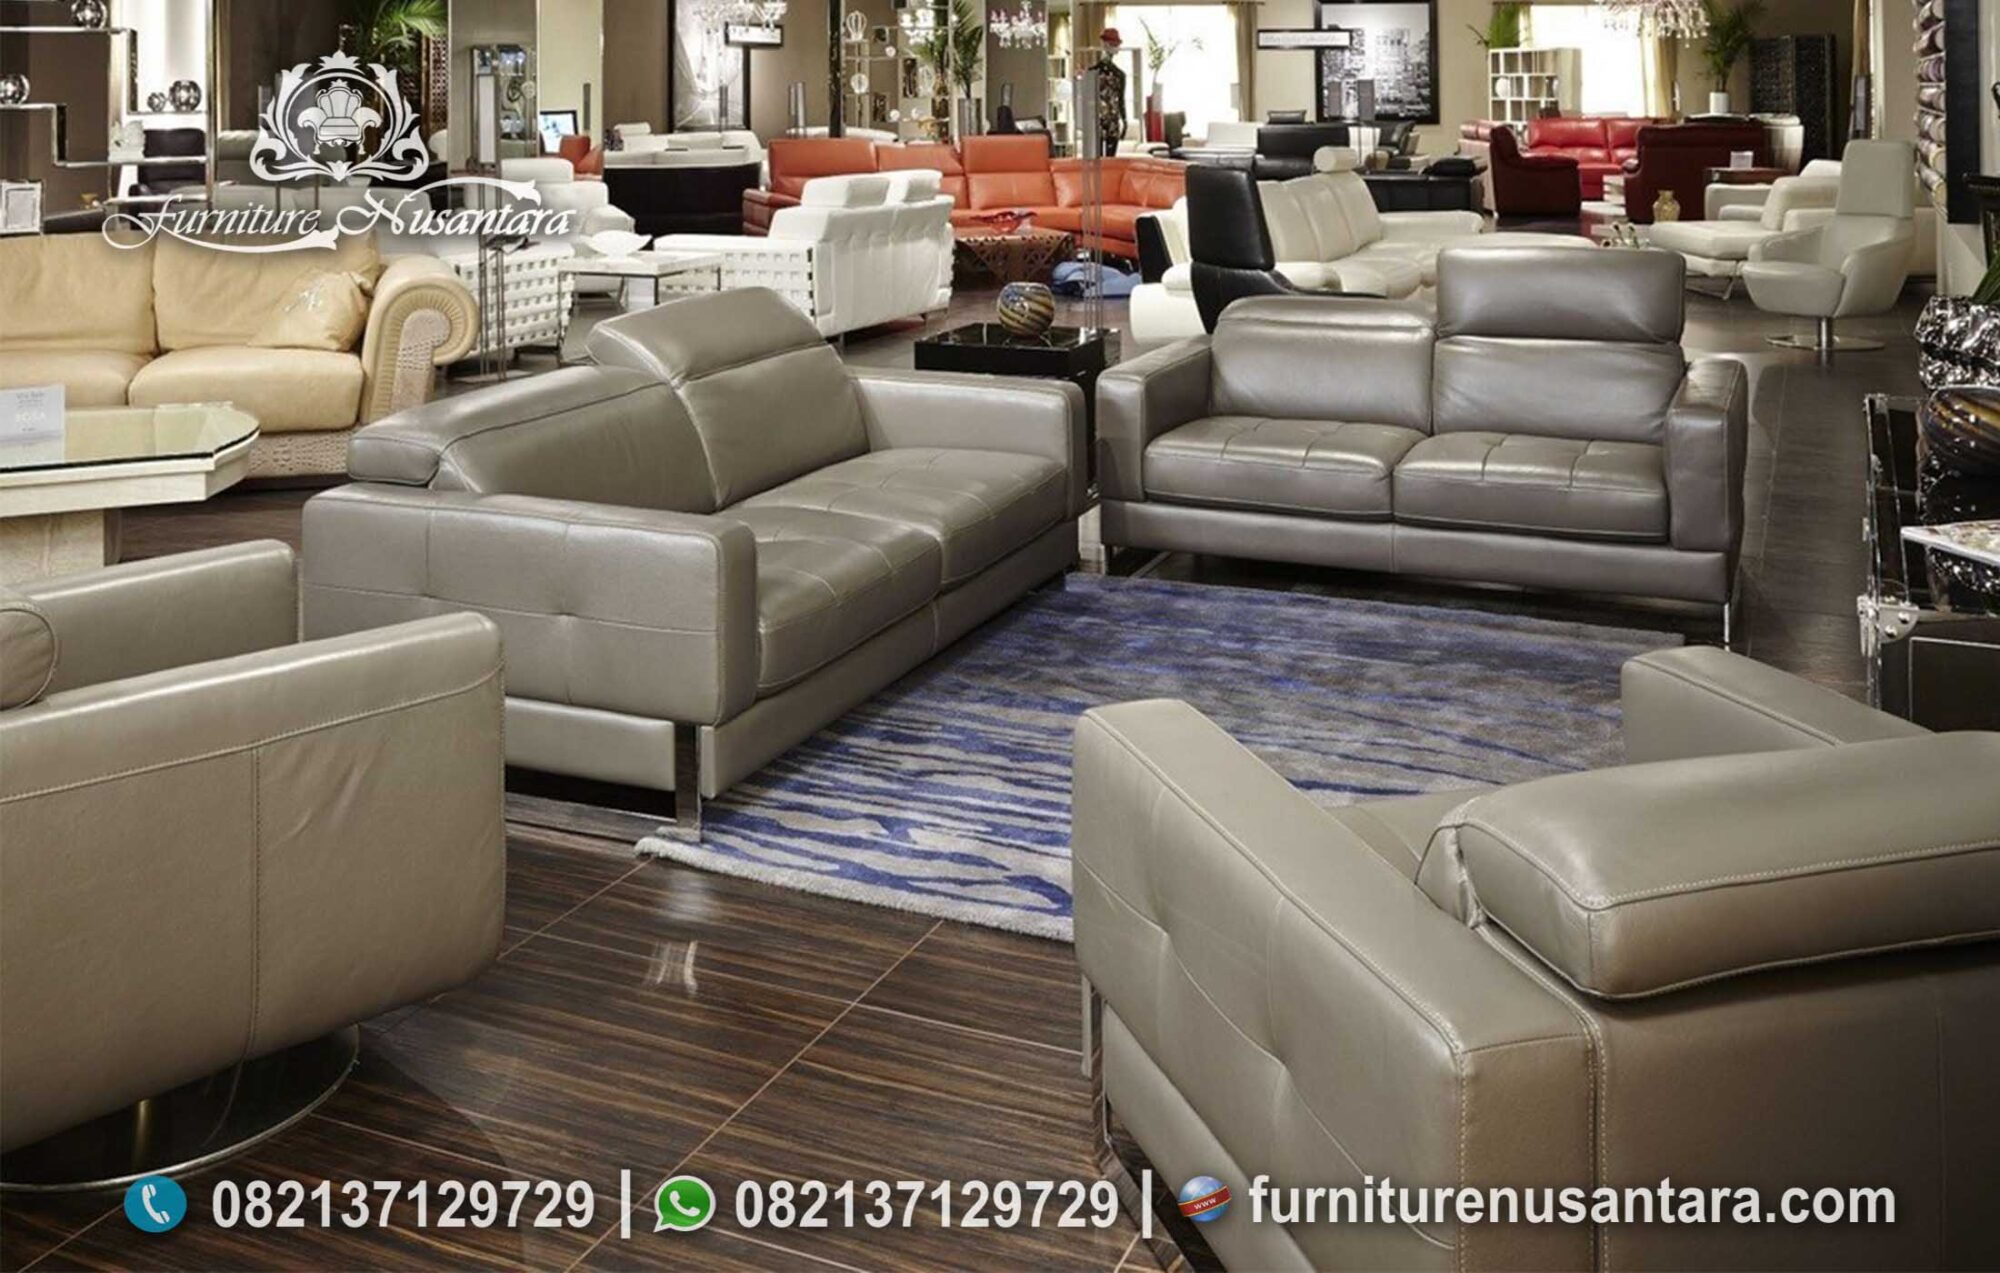 Sofa Bed Minimalis Italian Leather ST-94, Furniture Nusantara